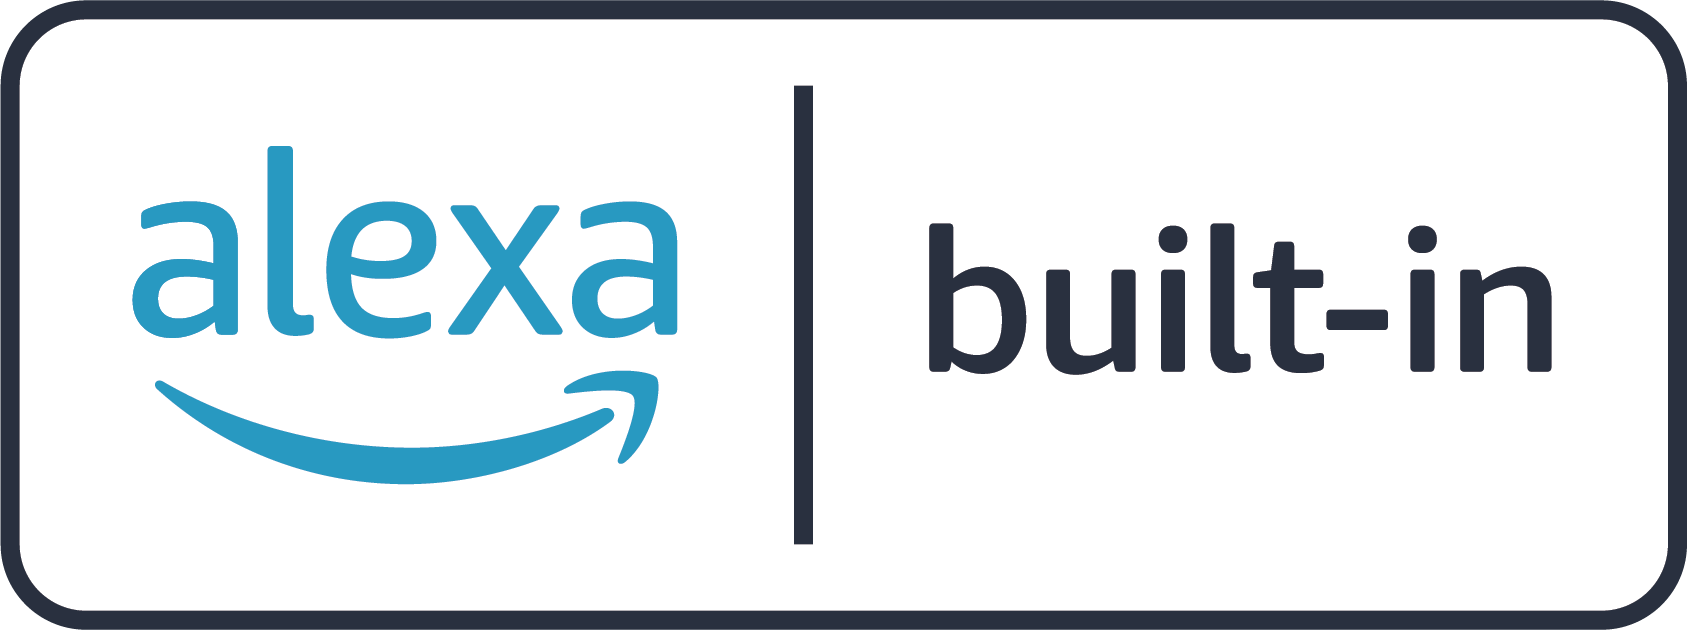 Alexa built-in badge